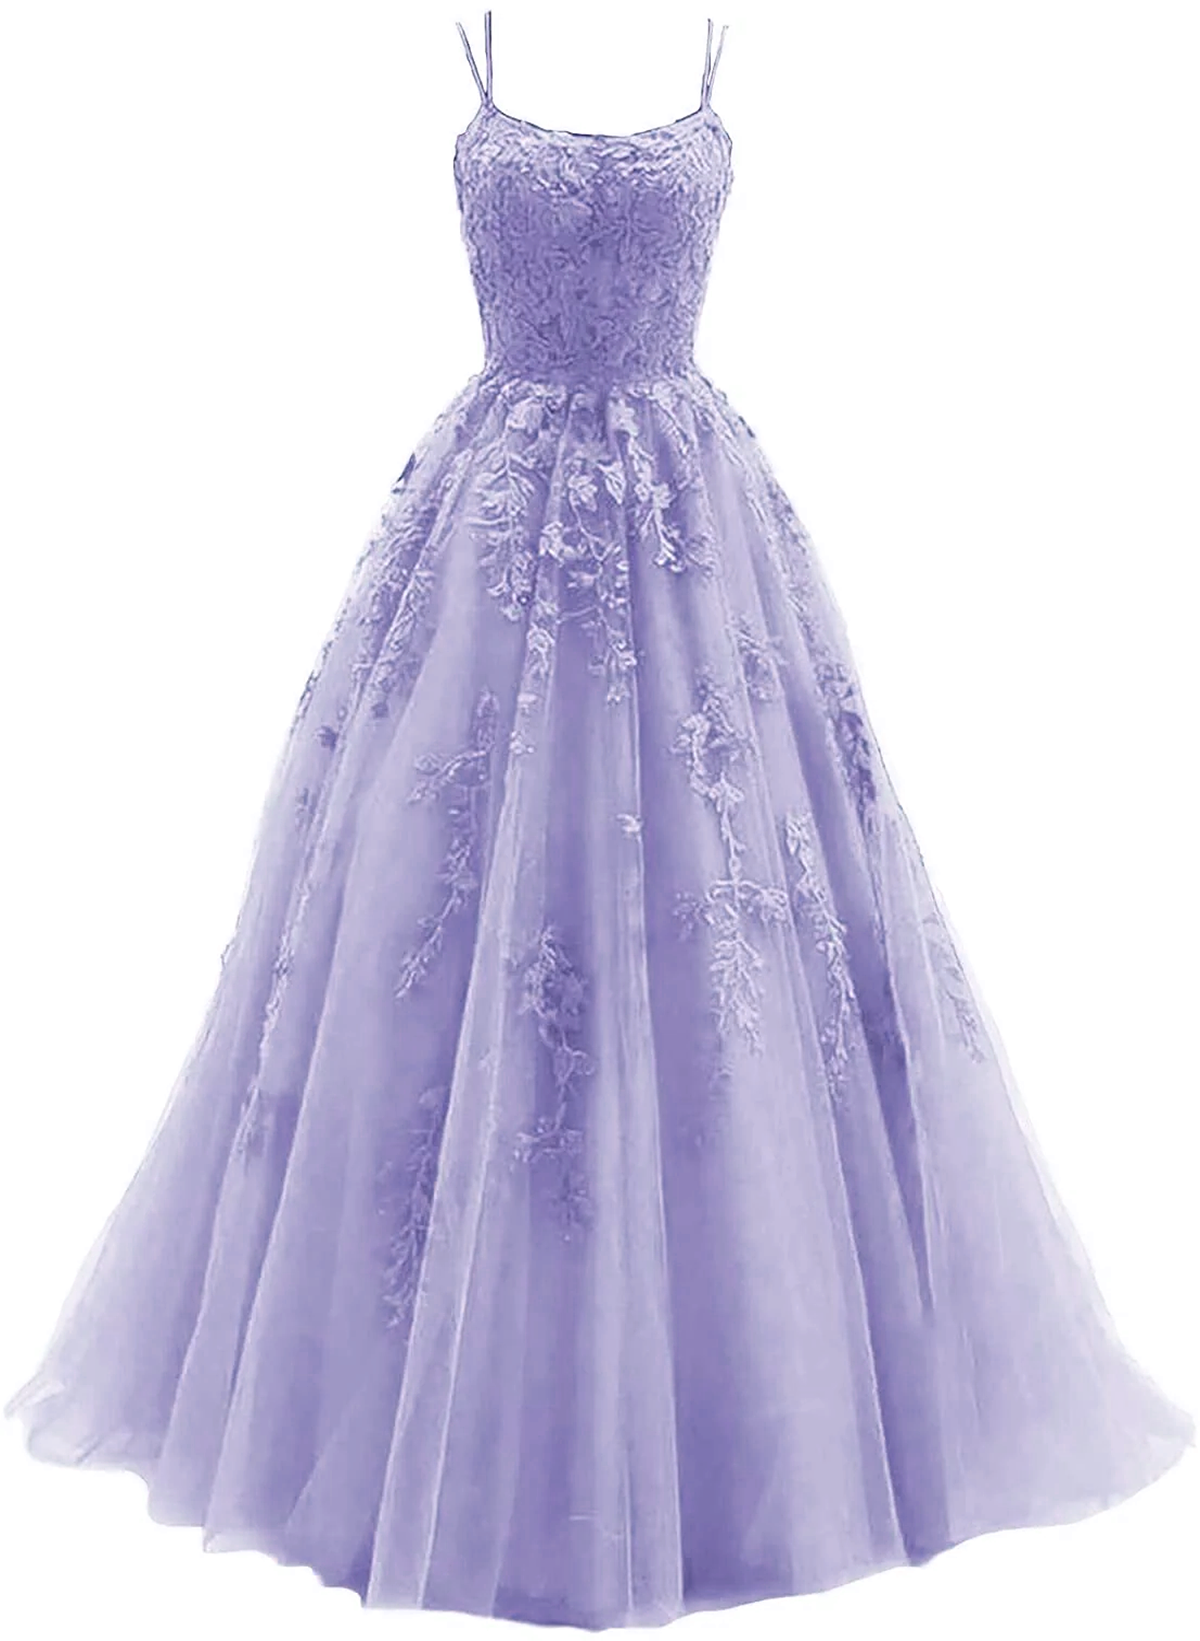 Formal Dress Short, Light Purple Straps Lace-Up Long Formal Dress, Light Purple Long Evening Dress Prom Dress